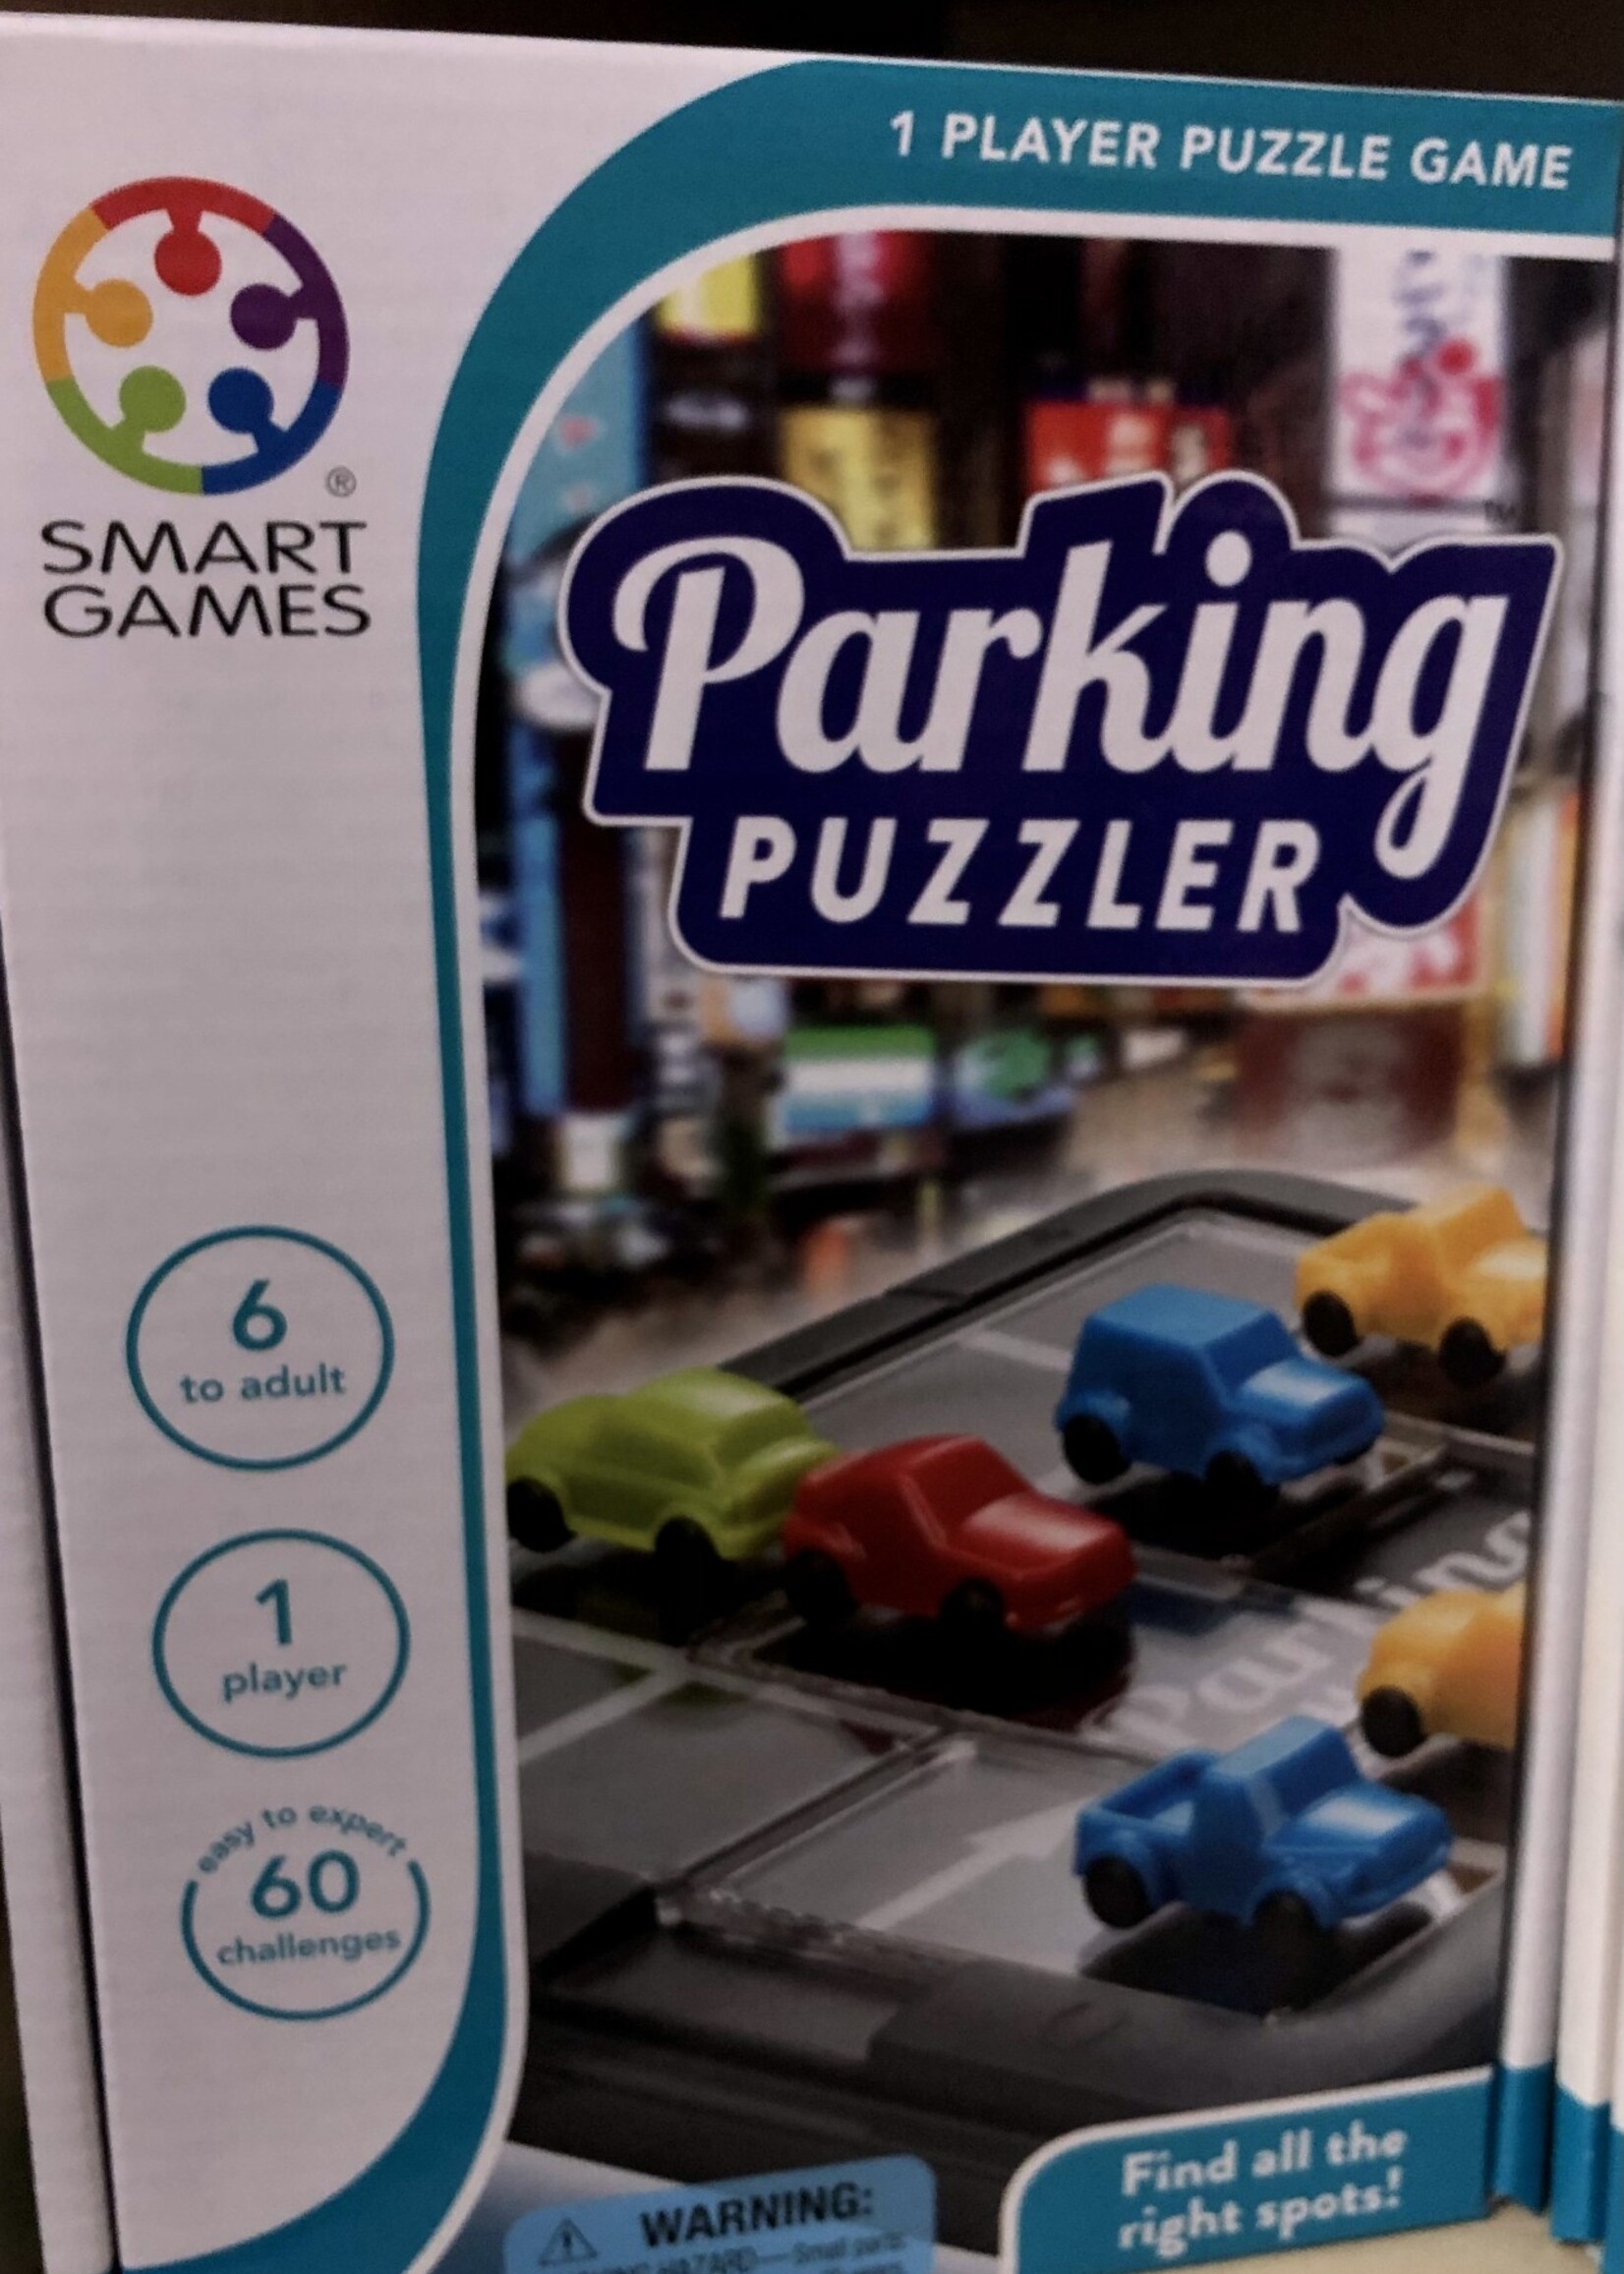 Puzzle Game - Parking Puzzler